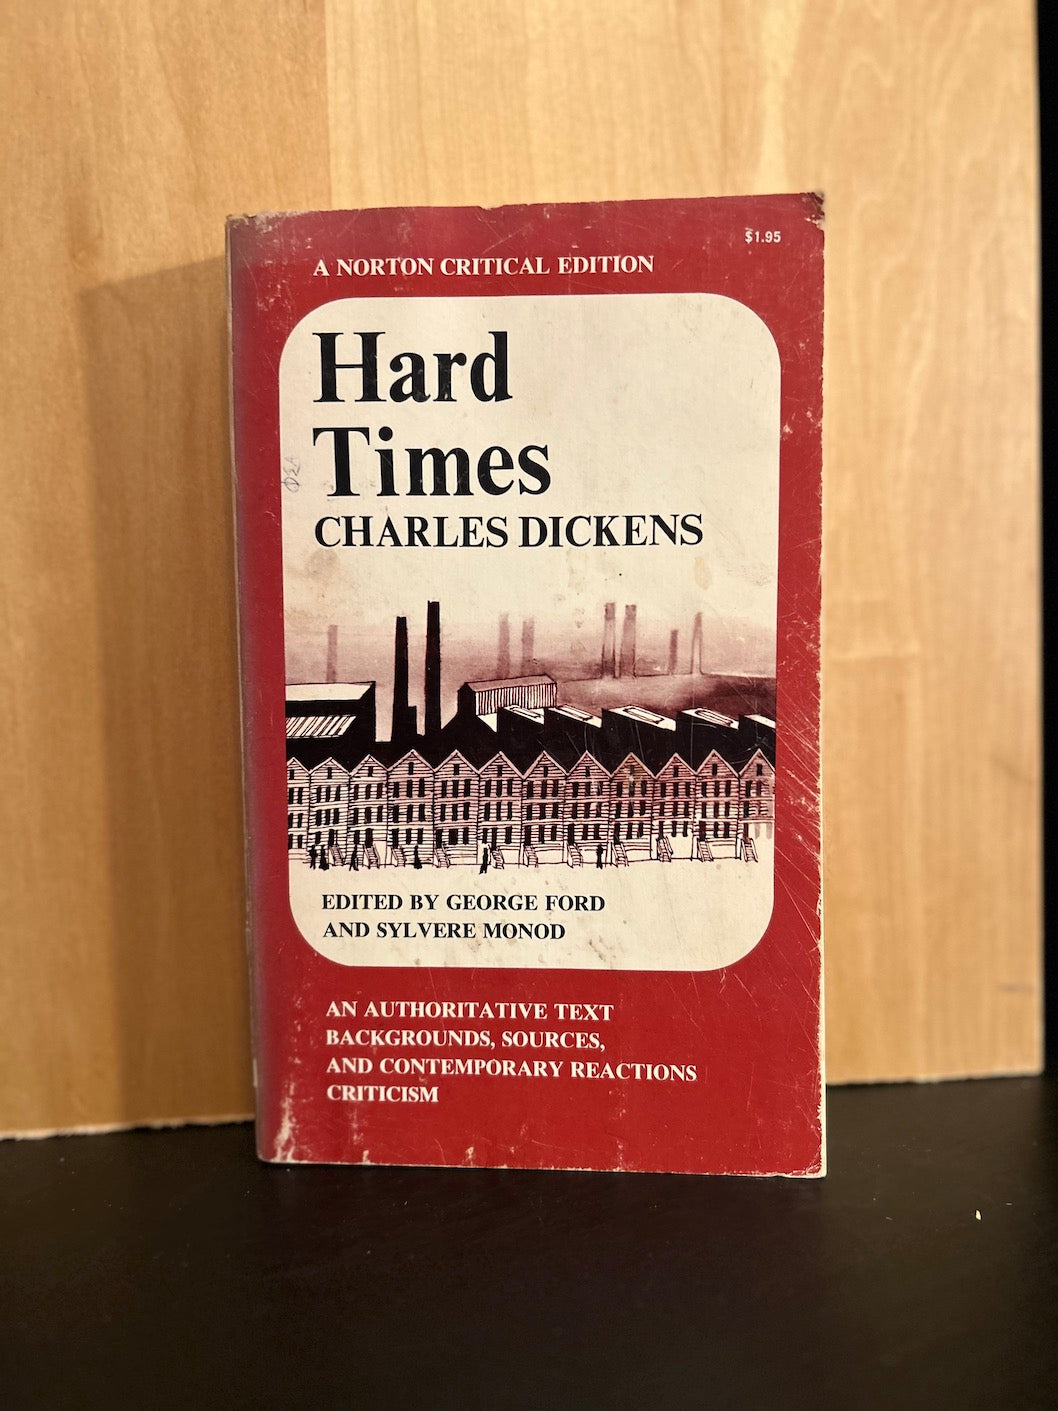 Hard Times - Charles Dickens - Norton